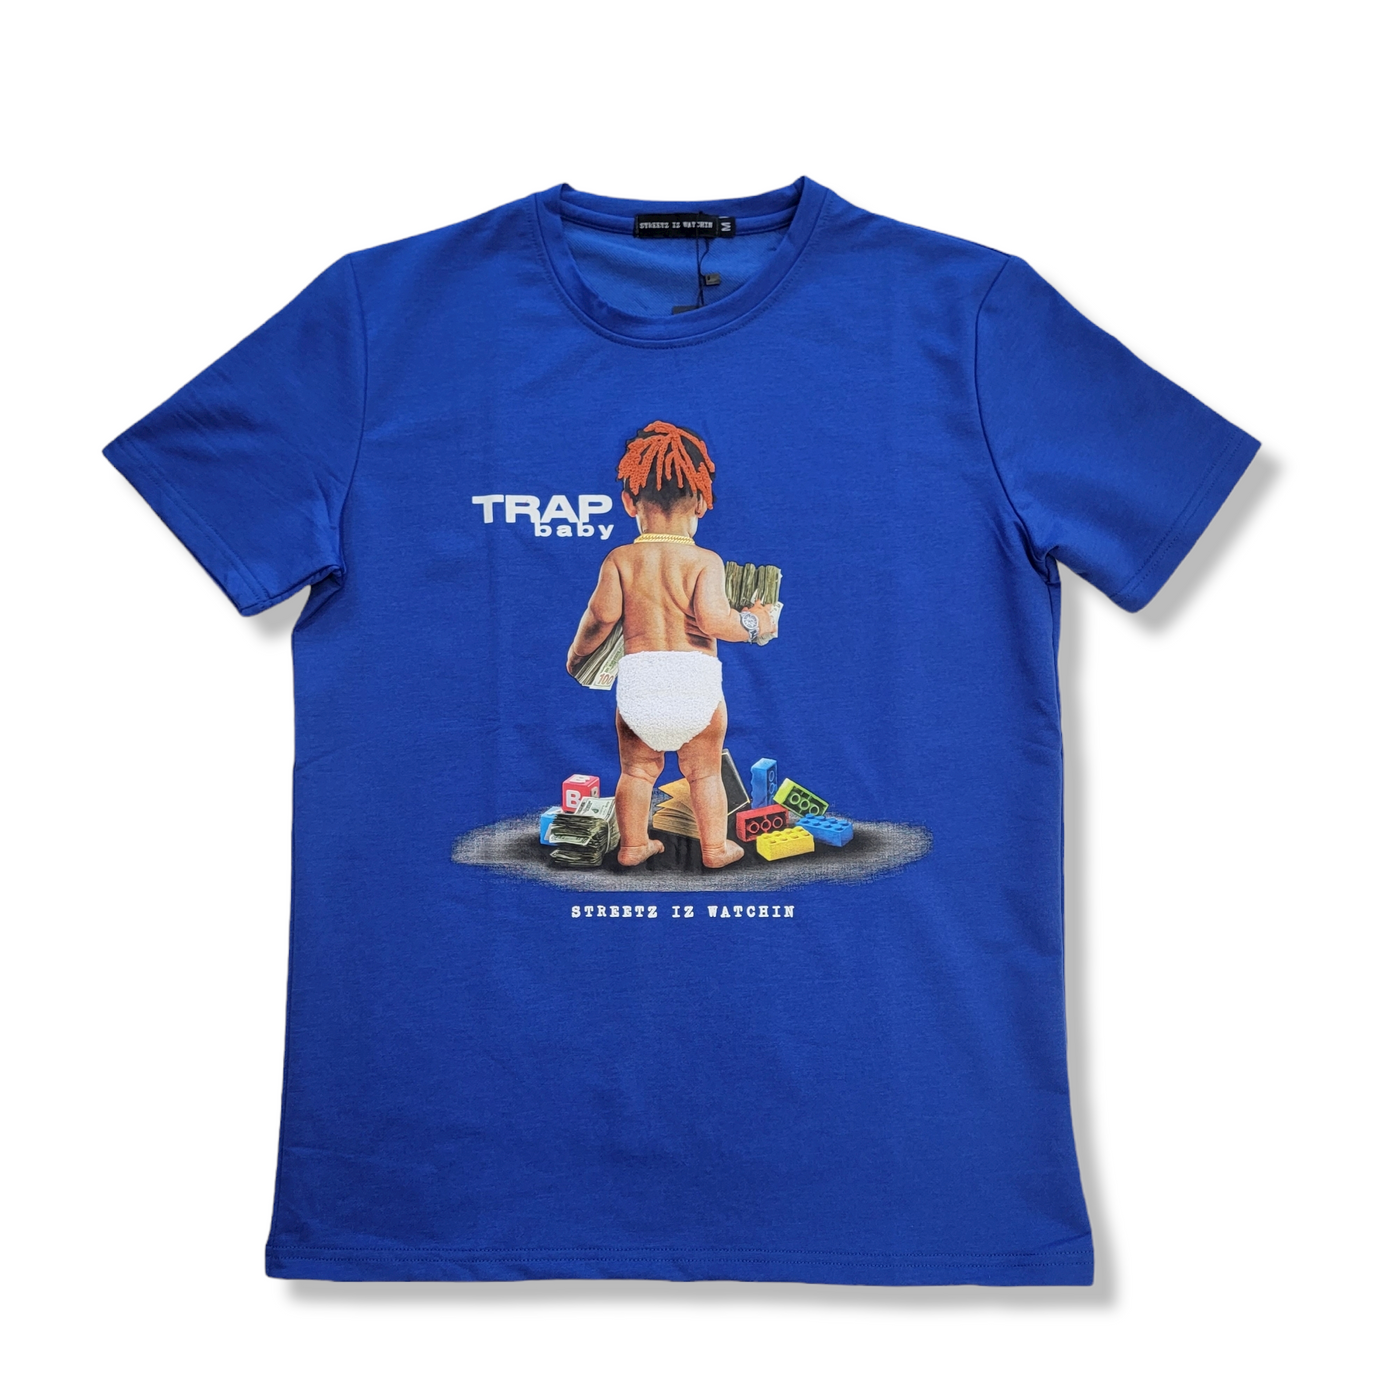 SIW Trap Baby T-Shirt Royal Blue